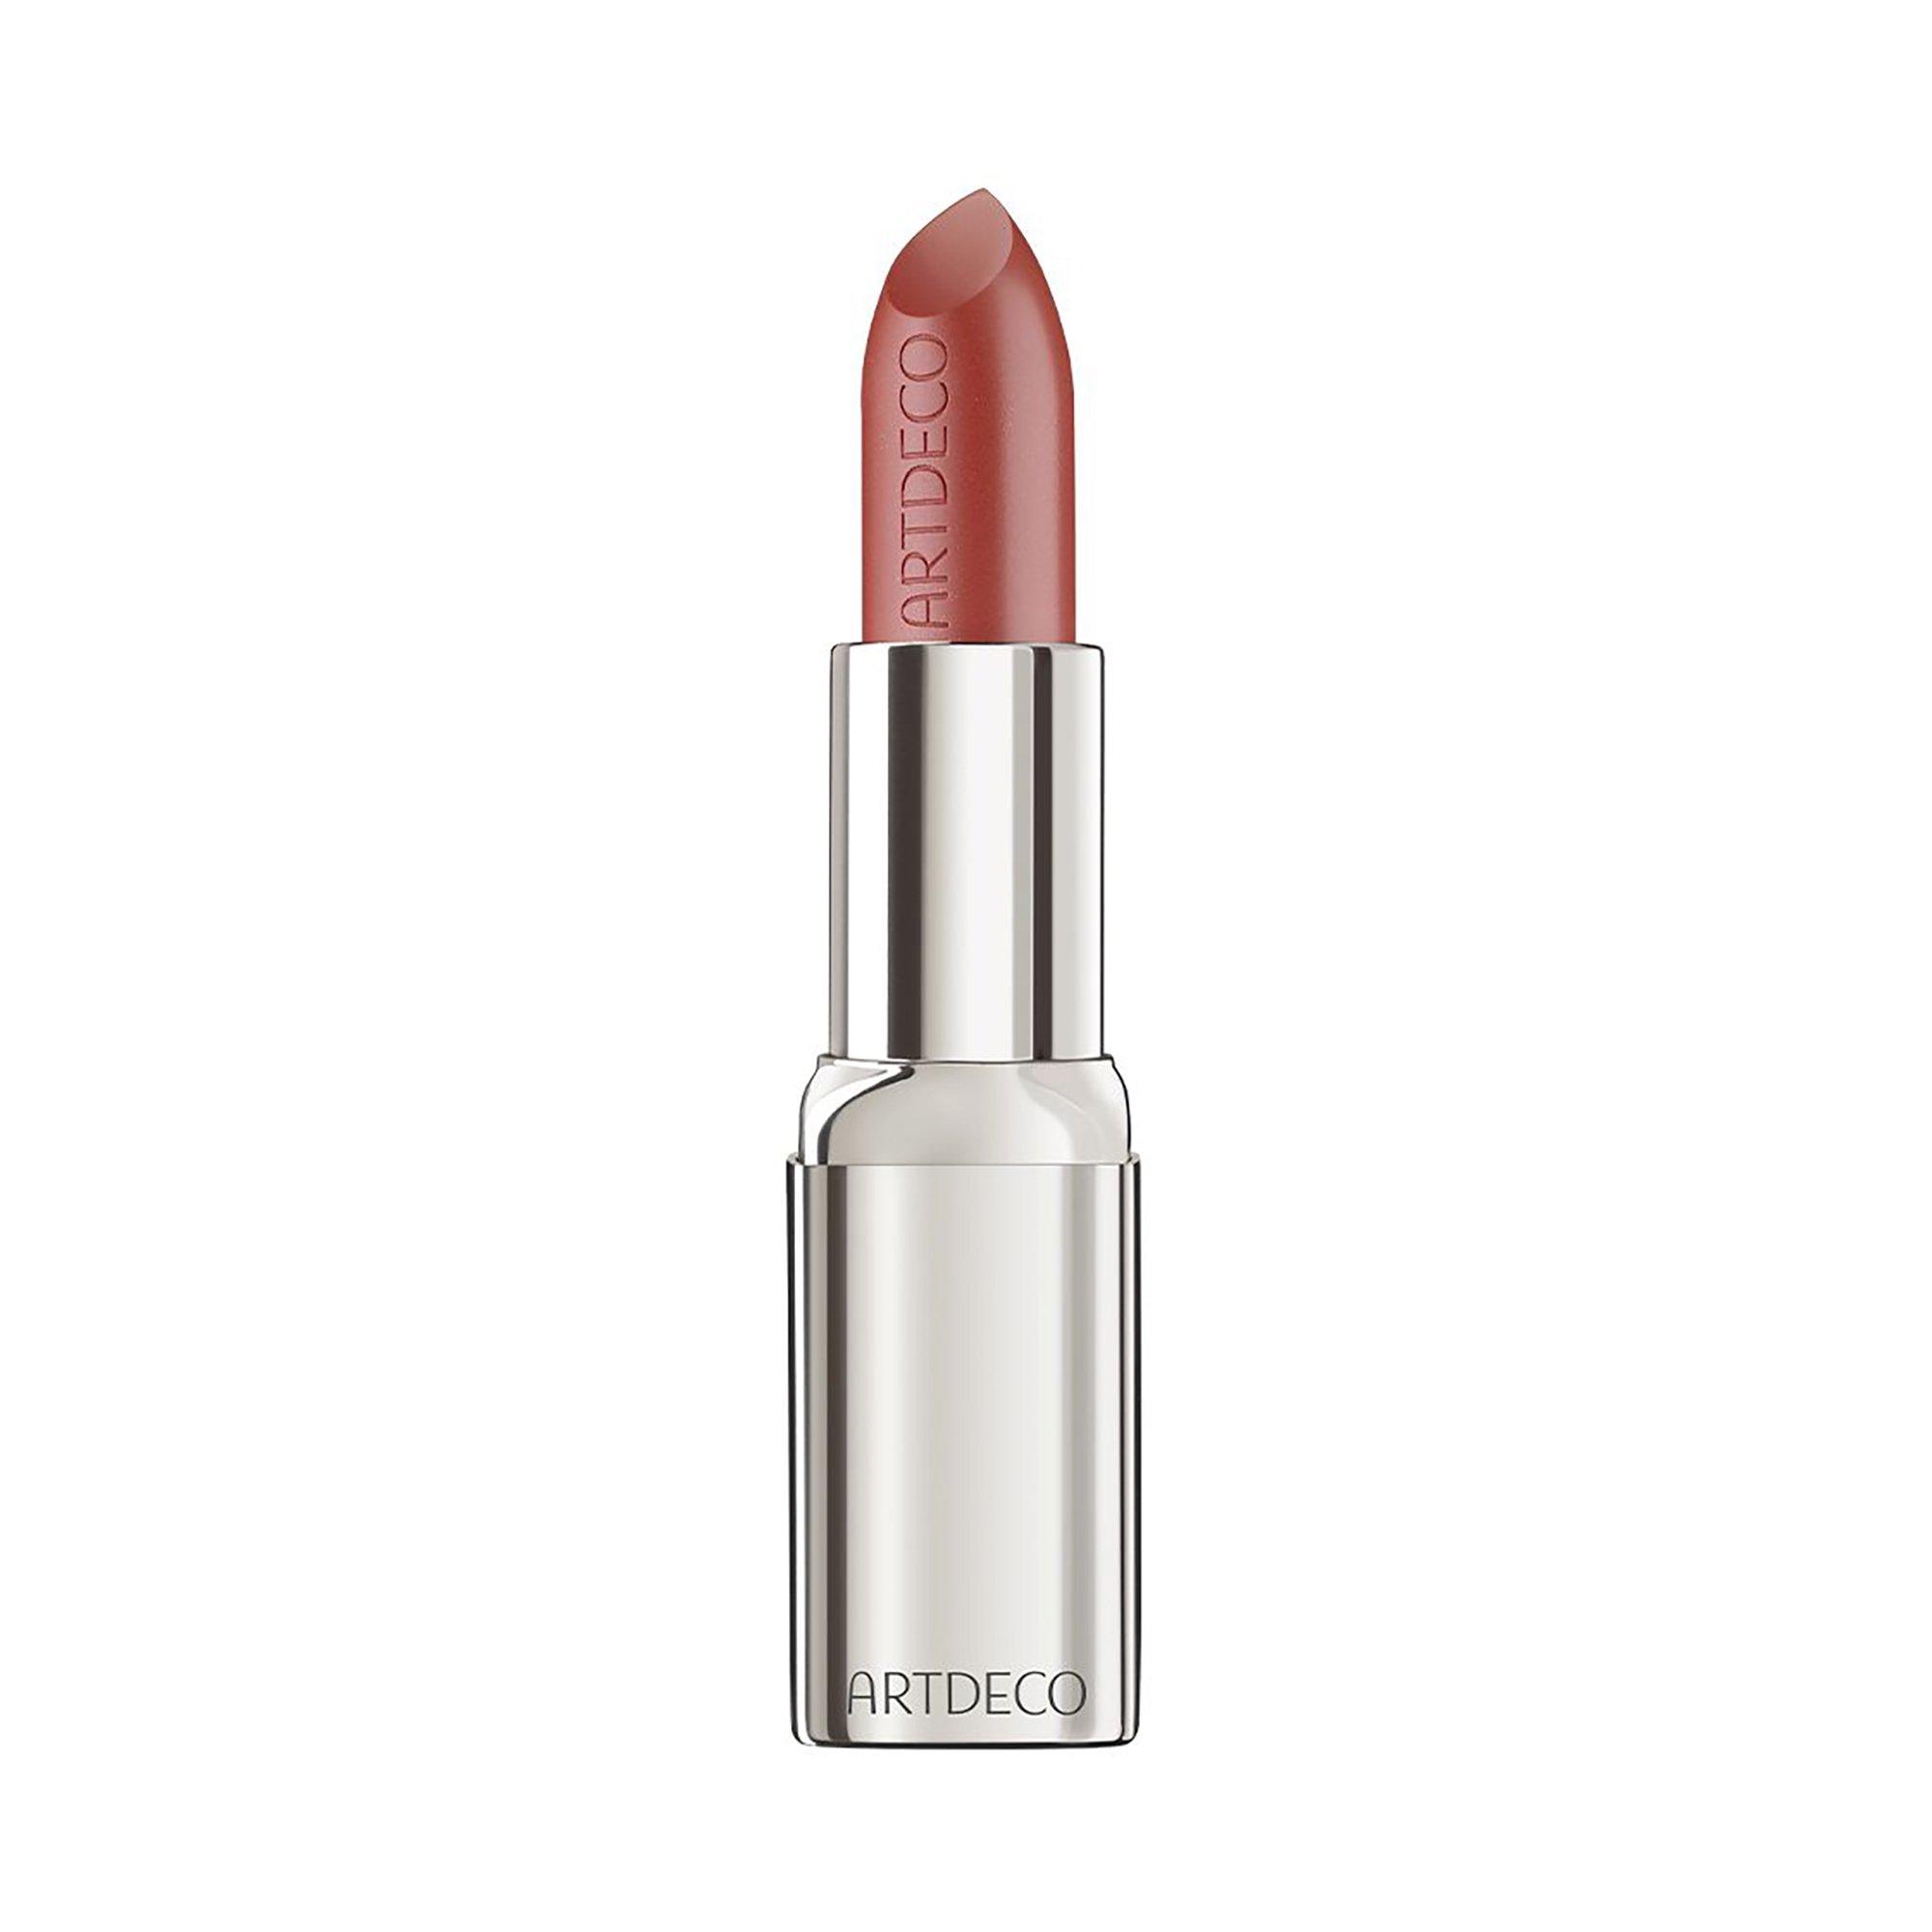 Image of ARTDECO High Performance Lipstick - 4g